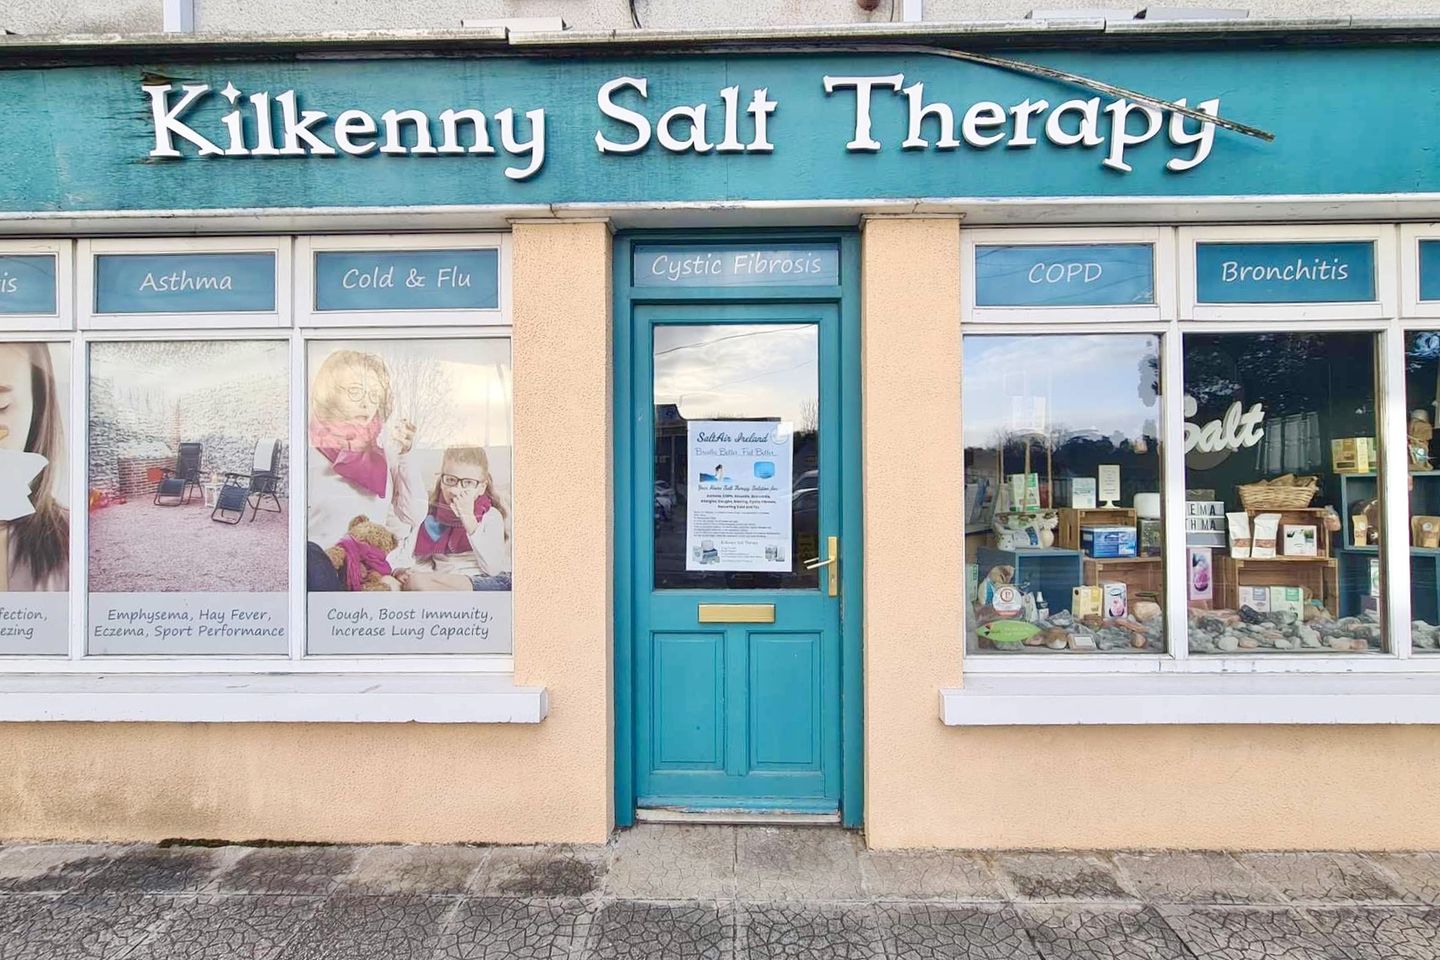 Kilkenny Salt Therapy, Unit 2, Enterprise House, Dublin Road, Kilkenny, Co. Kilkenny, R95Y3C9